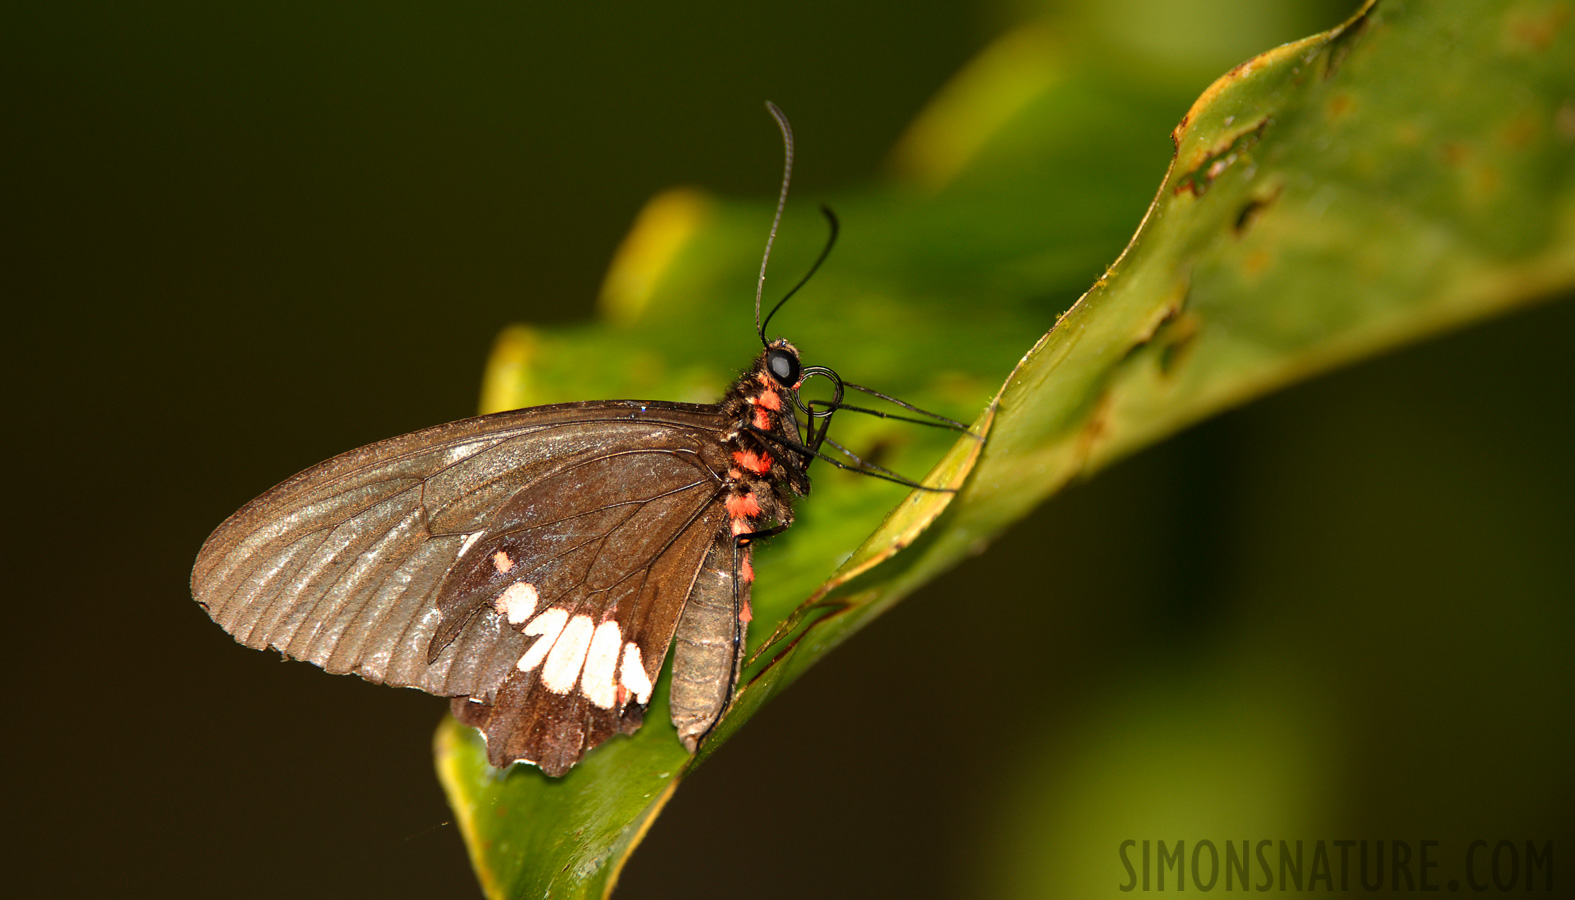 Papilio anchisiades idaeus [400 mm, 1/60 sec at f / 4.0, ISO 250]